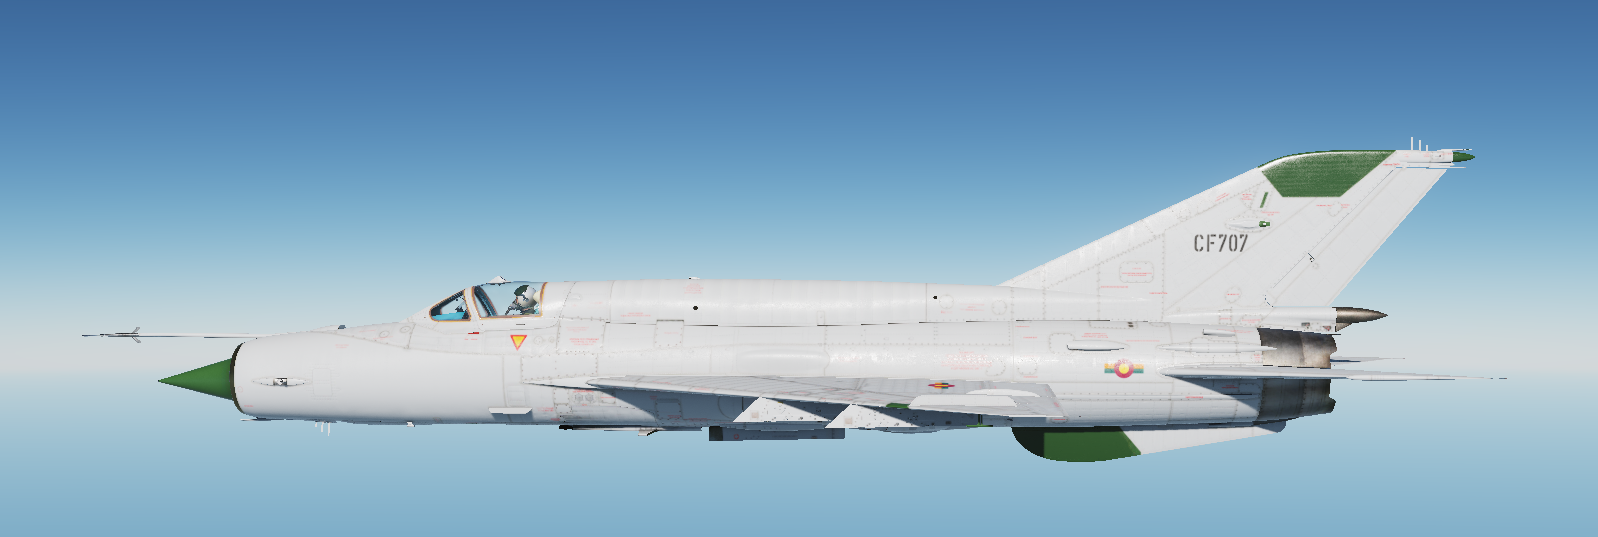 Sri Lanka Airforce MiG-21 Fictional